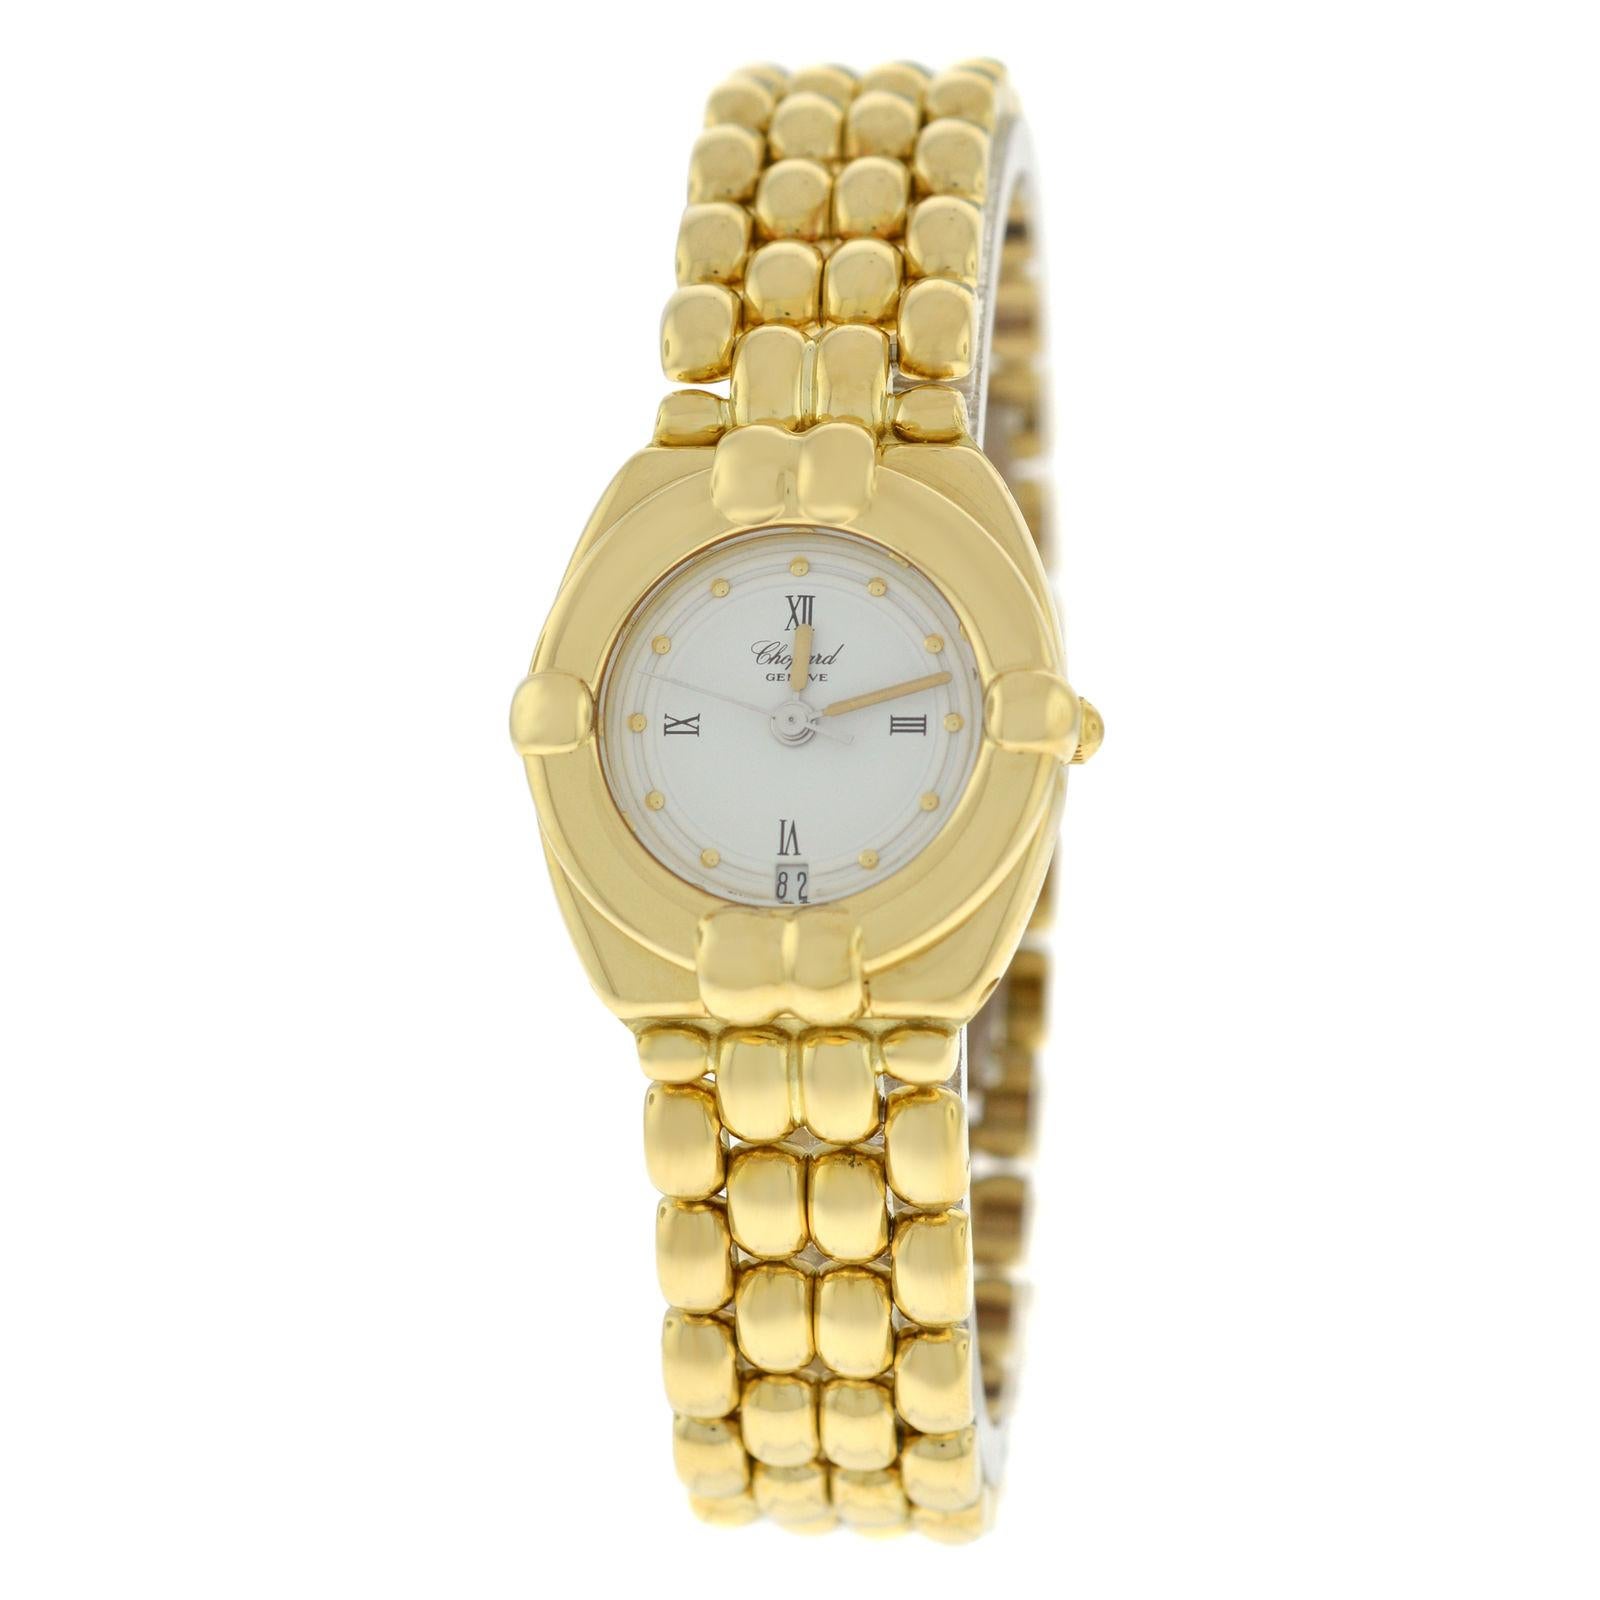 Authentic Ladies Chopard Gstaad Quartz 18 Karat Yellow Gold Watch For Sale